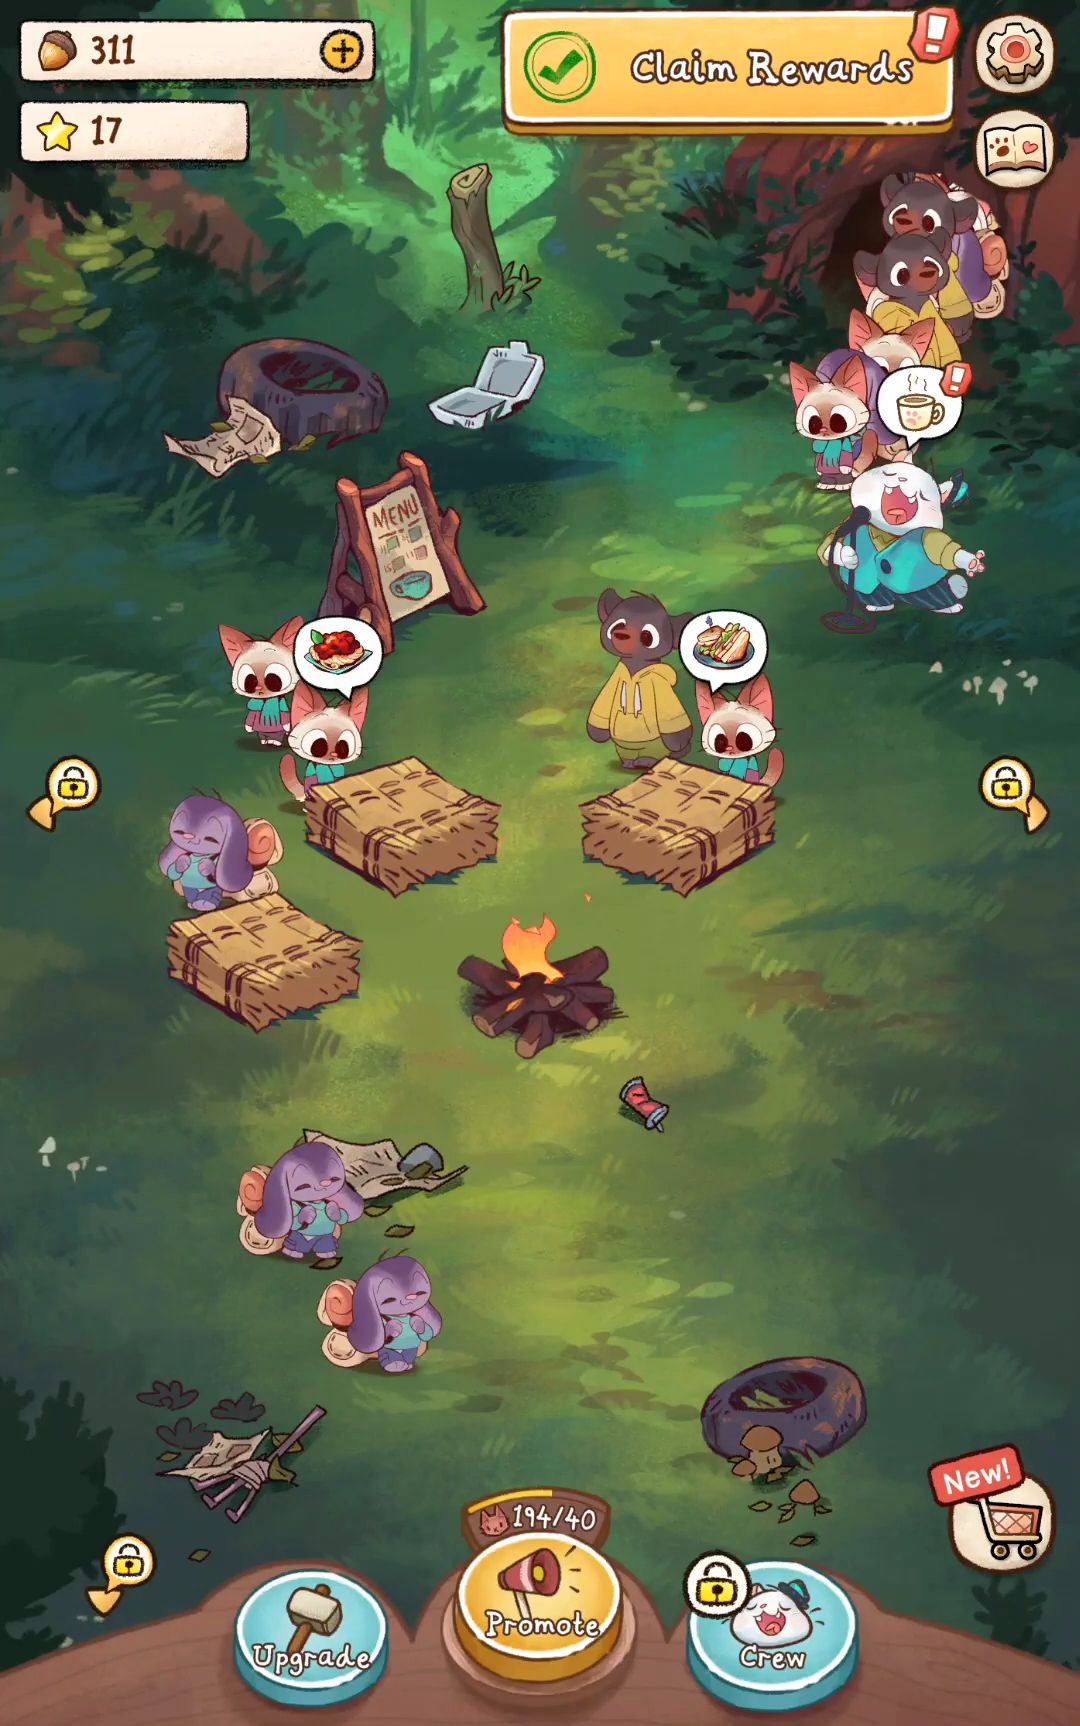 Download Campfire Cat Cafe - Cute Game für Android kostenlos.